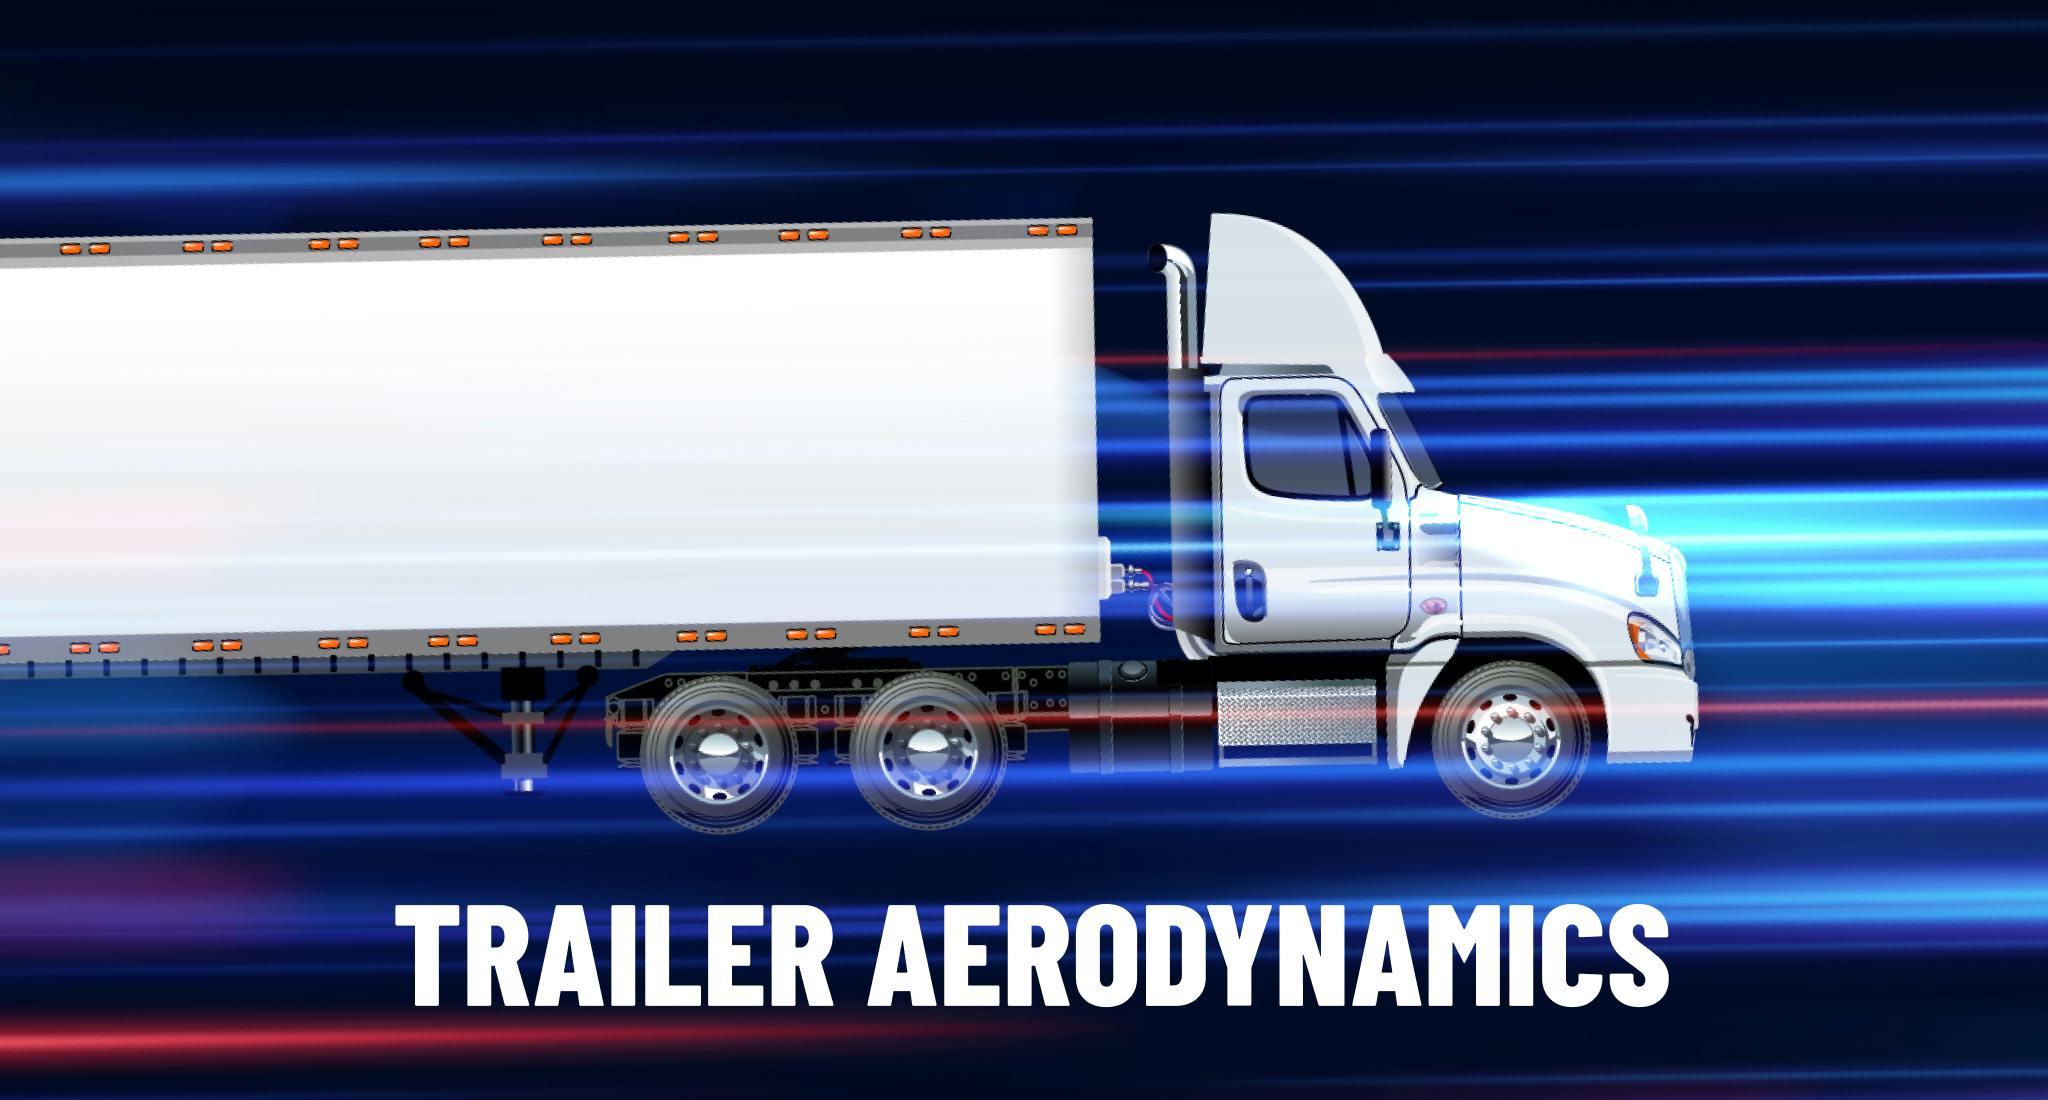 Trailer aerodynamics graph. 